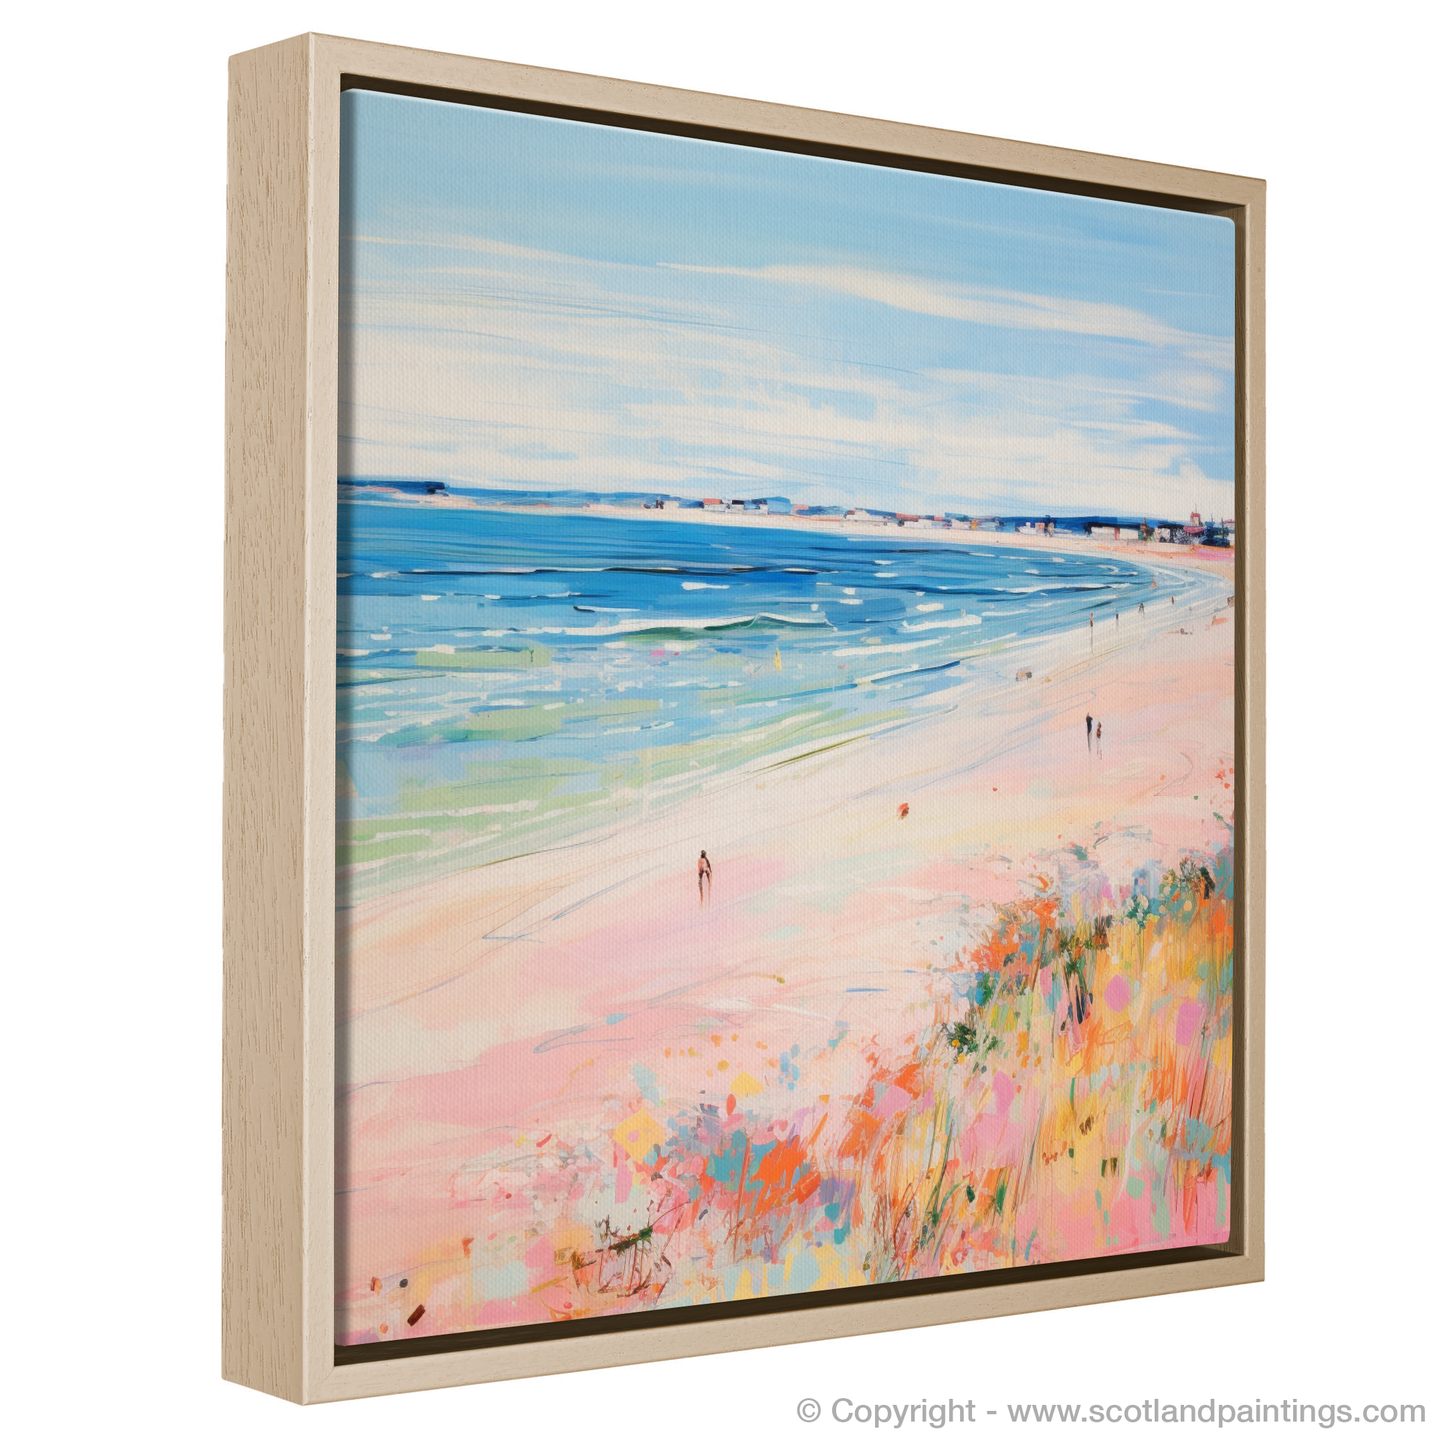 Painting and Art Print of Nairn Beach, Nairn in summer entitled "Summer Serenity at Nairn Beach".